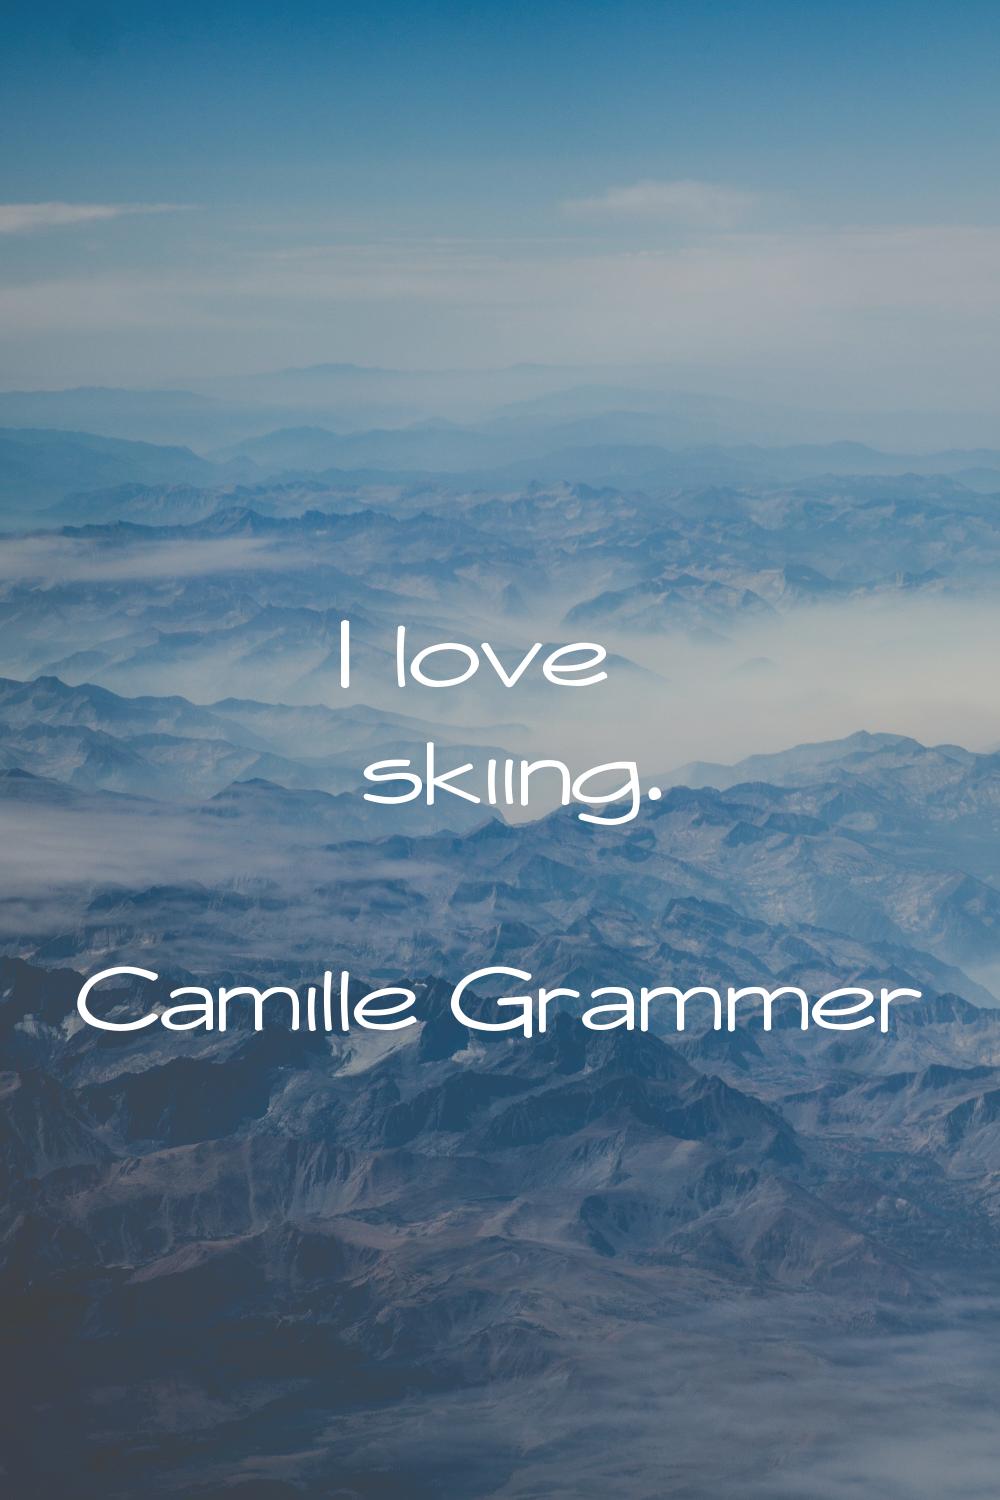 I love skiing.